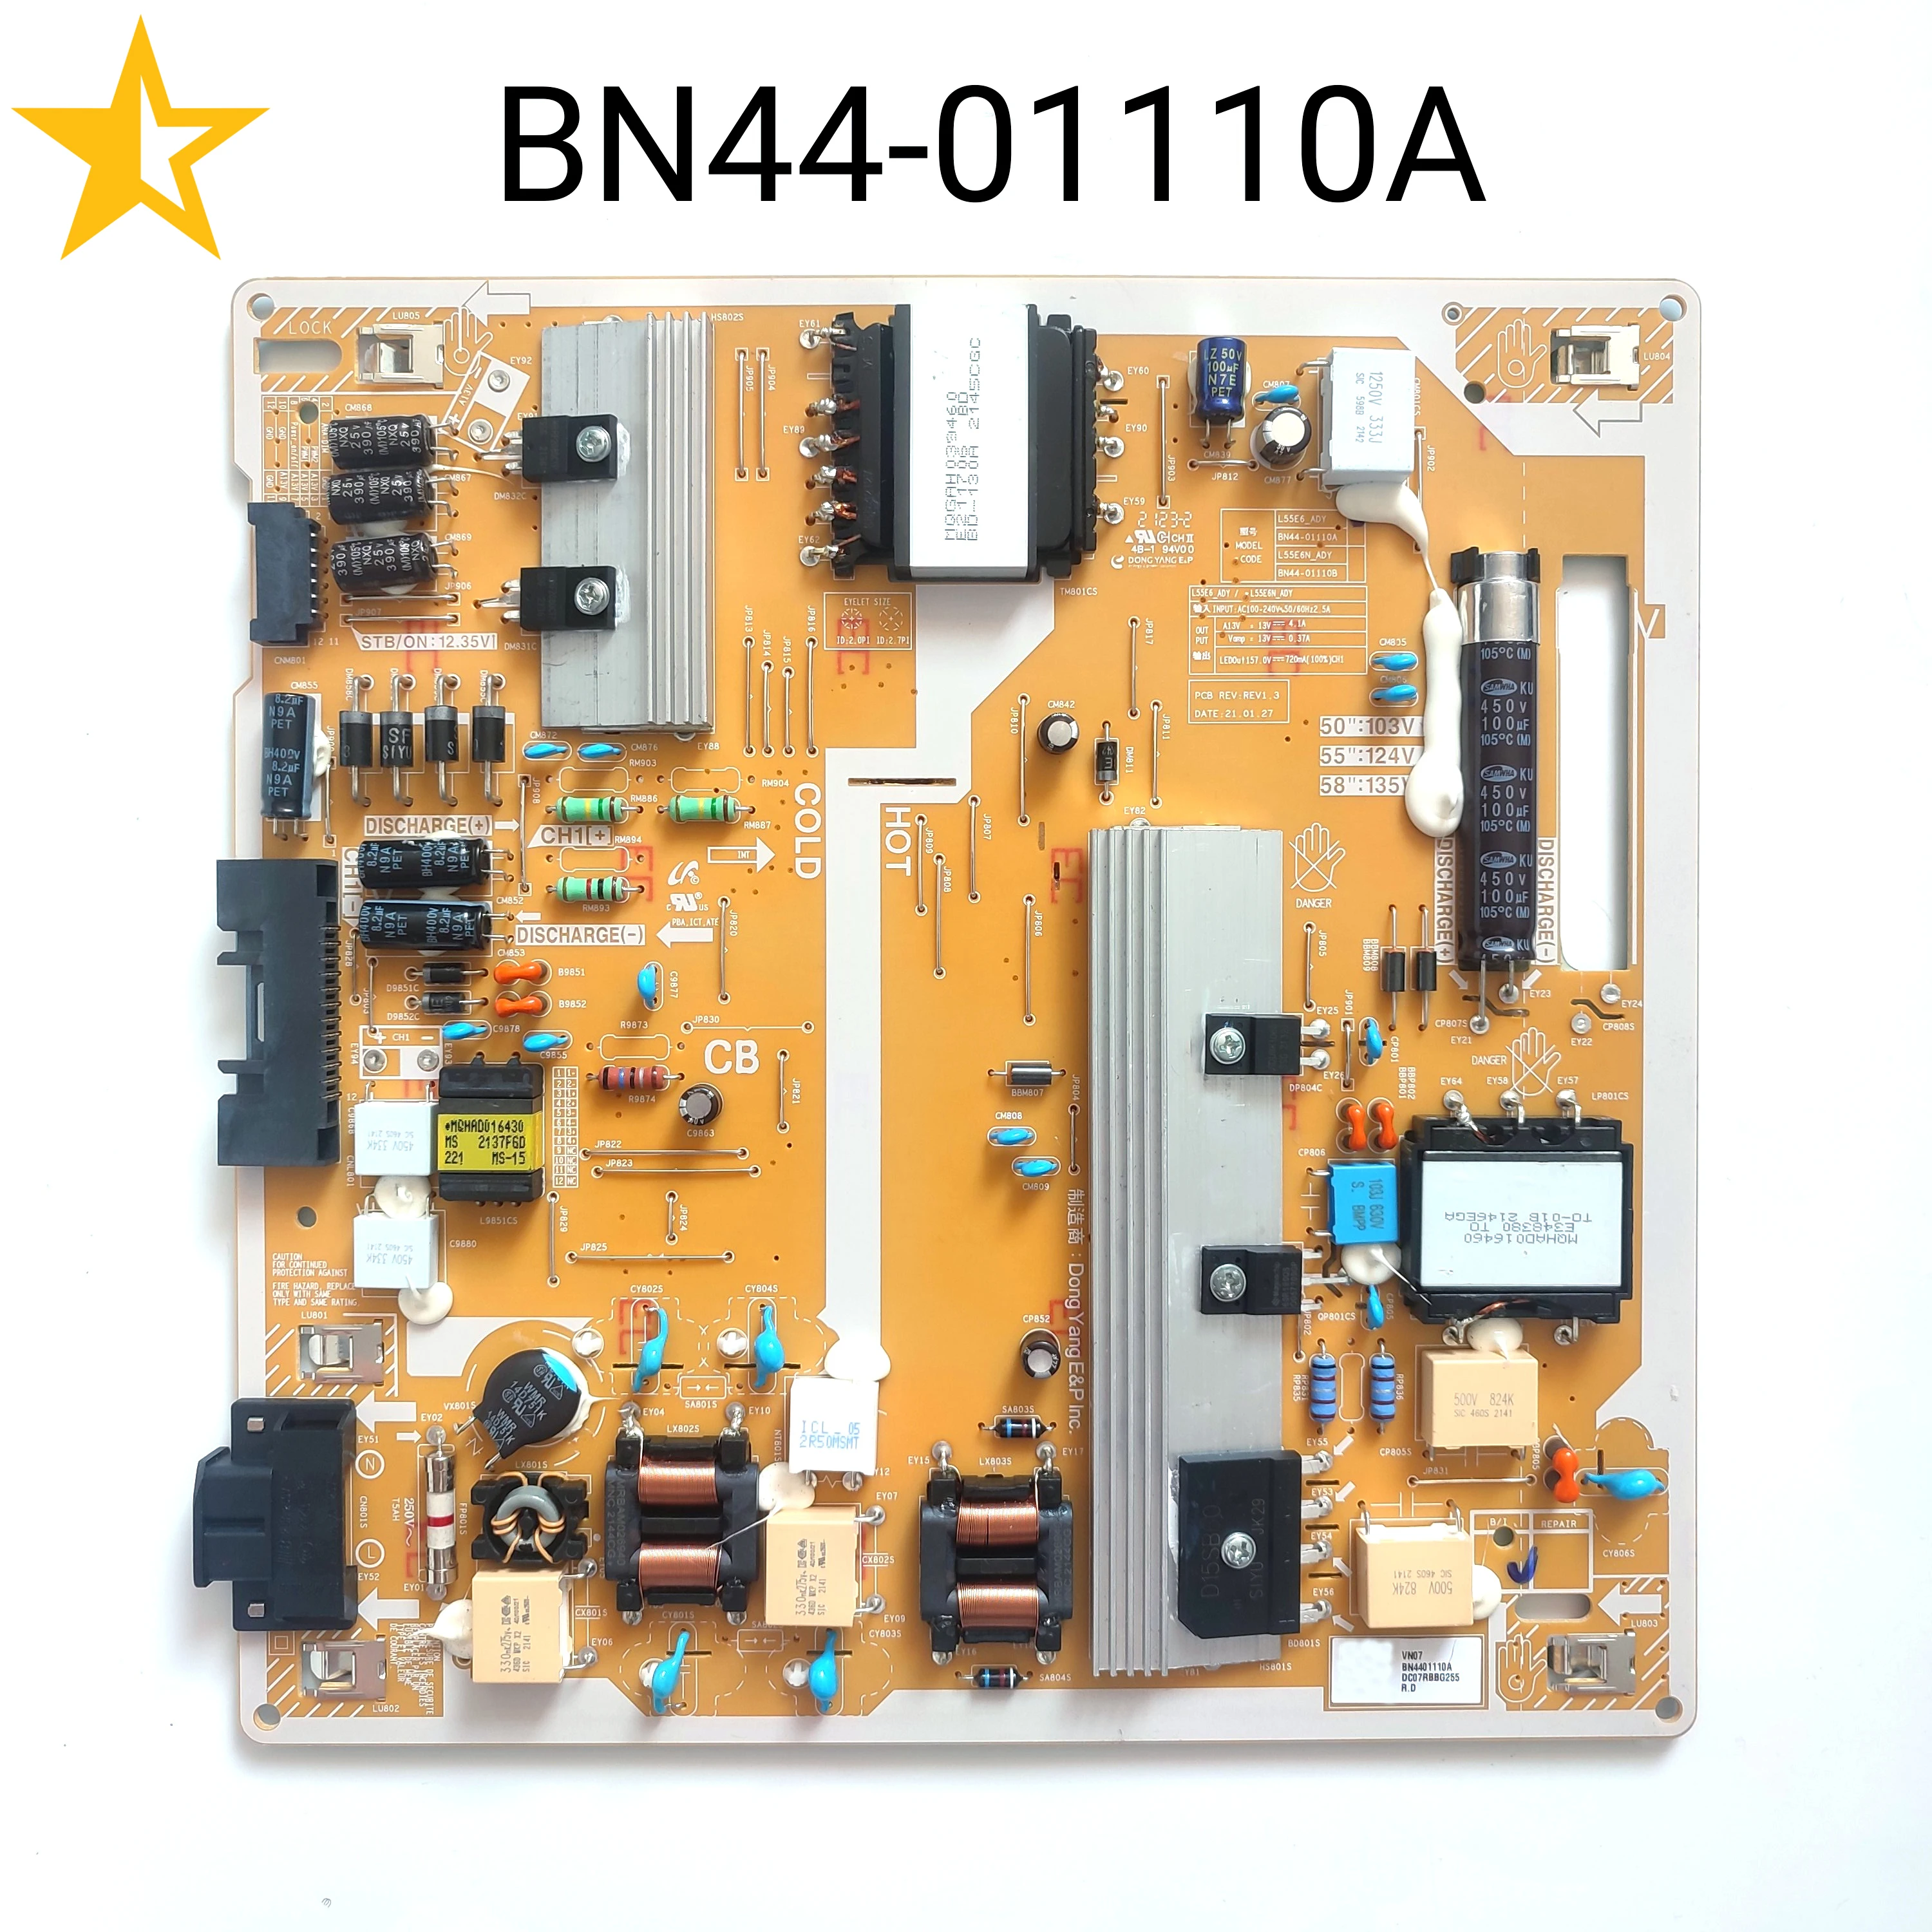 

BN44-01110A L55E6_ADY Power Supply/LED Board For HG50AU800NF UN55AU8000BXZA UE50AU8070U UE50AU8000K UN50AU8000FXZA TV Parts